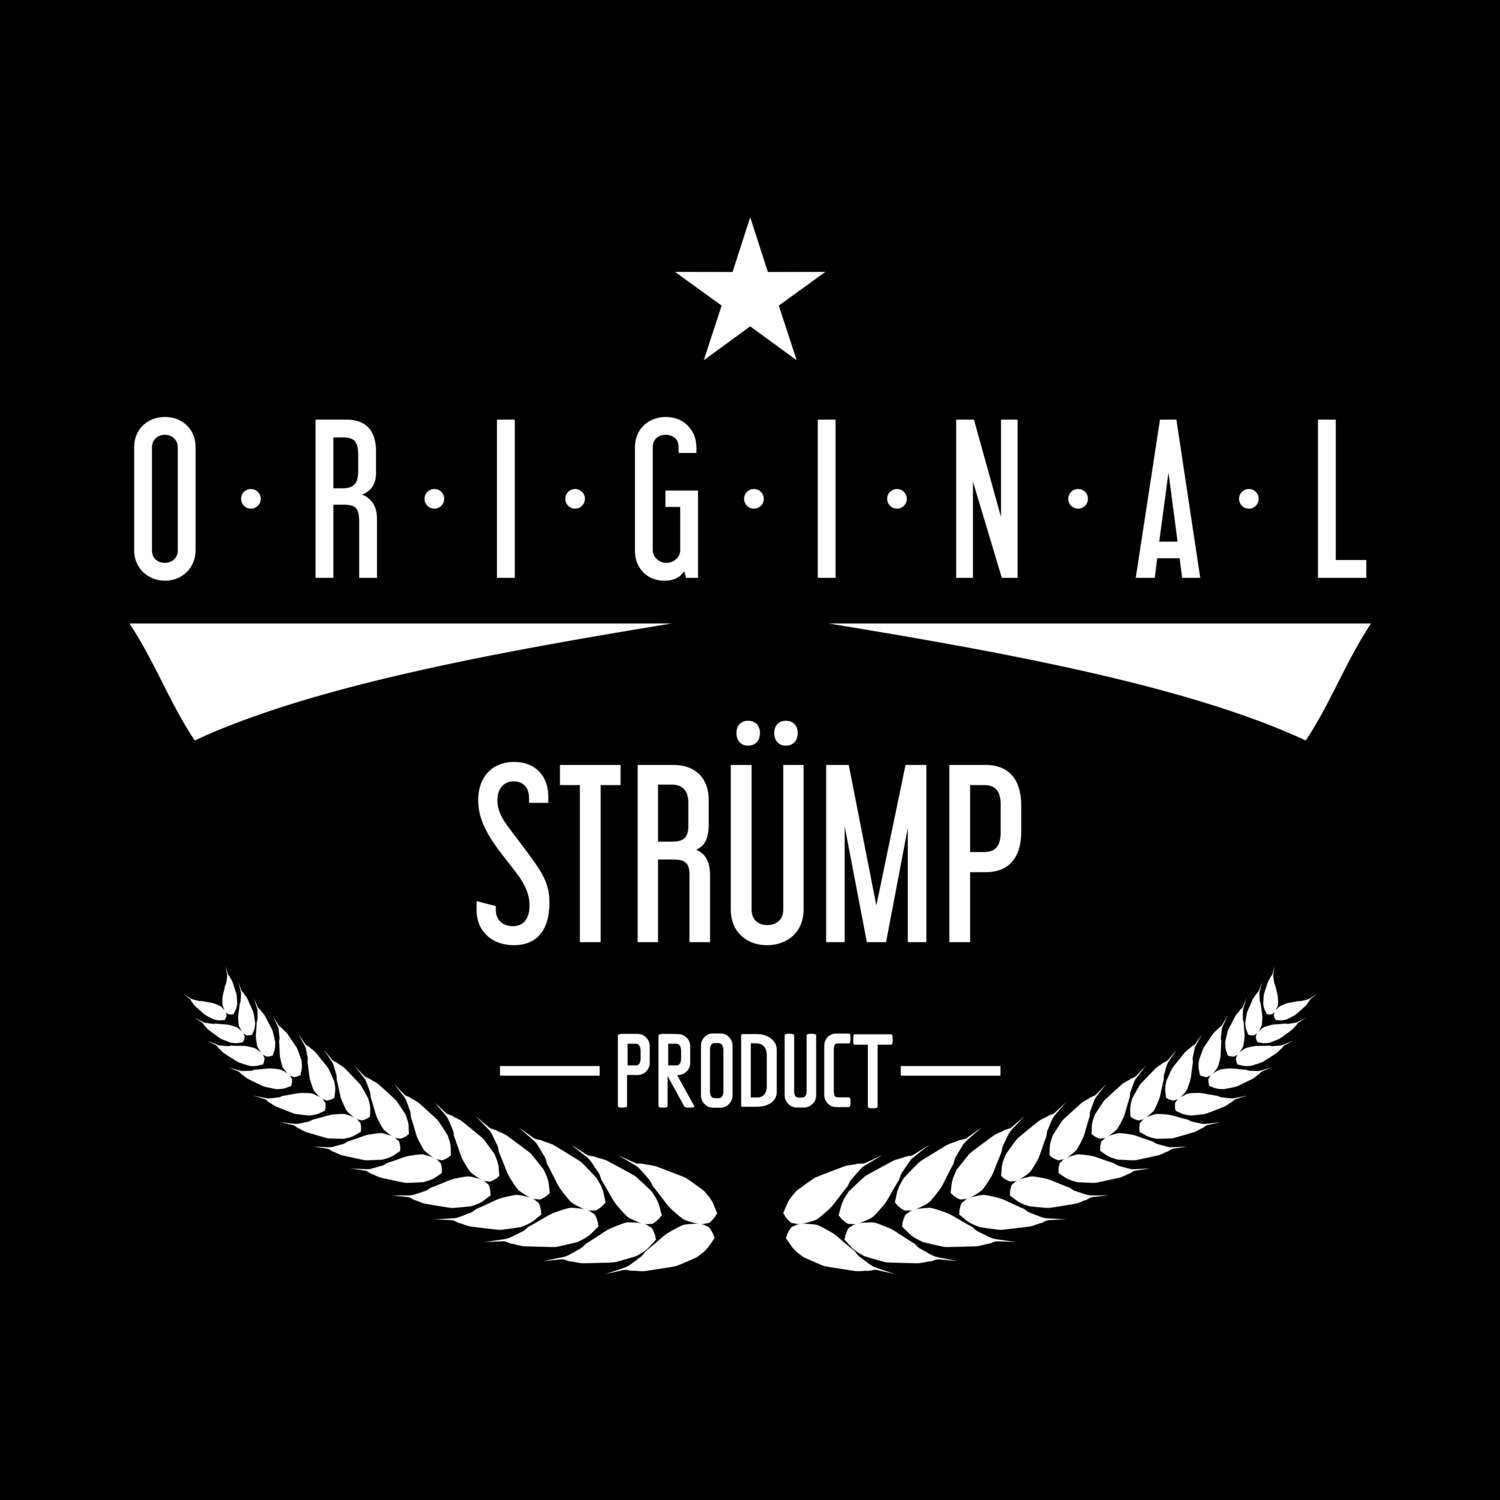 Strümp T-Shirt »Original Product«